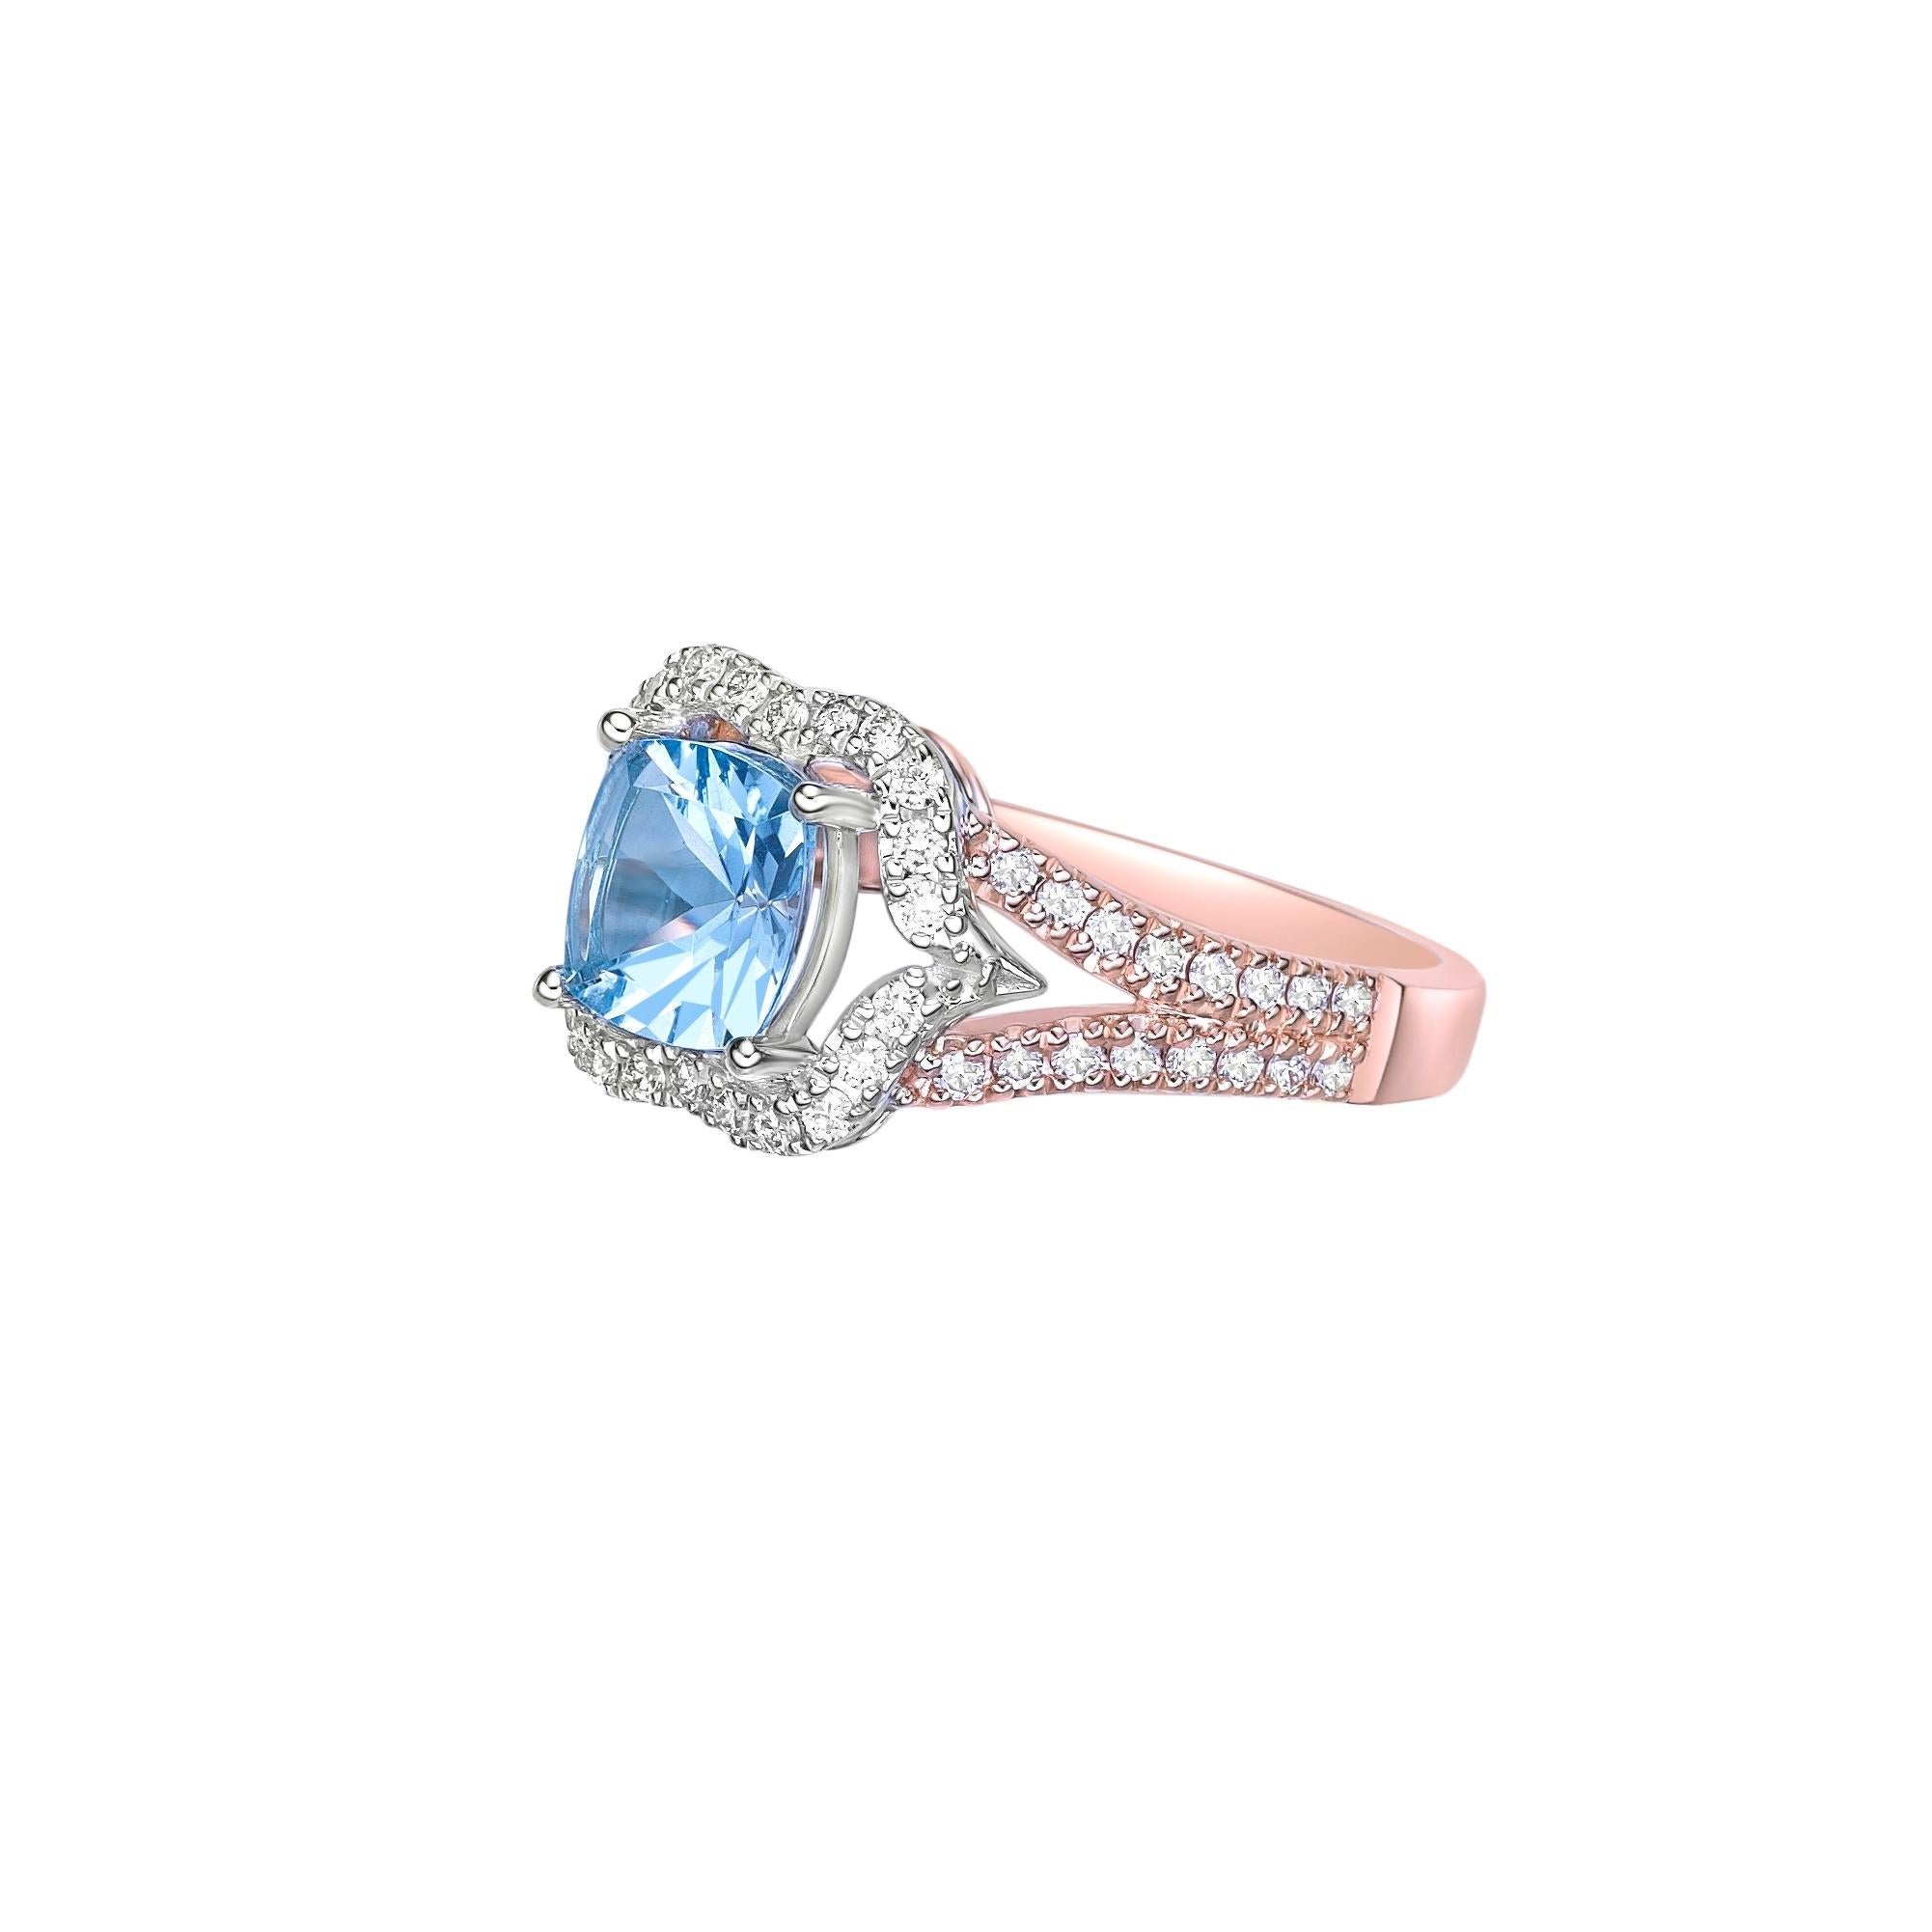 Cushion Cut 1.18 Carat Aquamarine Fancy Ring in 18Karat White Rose Gold with White Diamond. For Sale